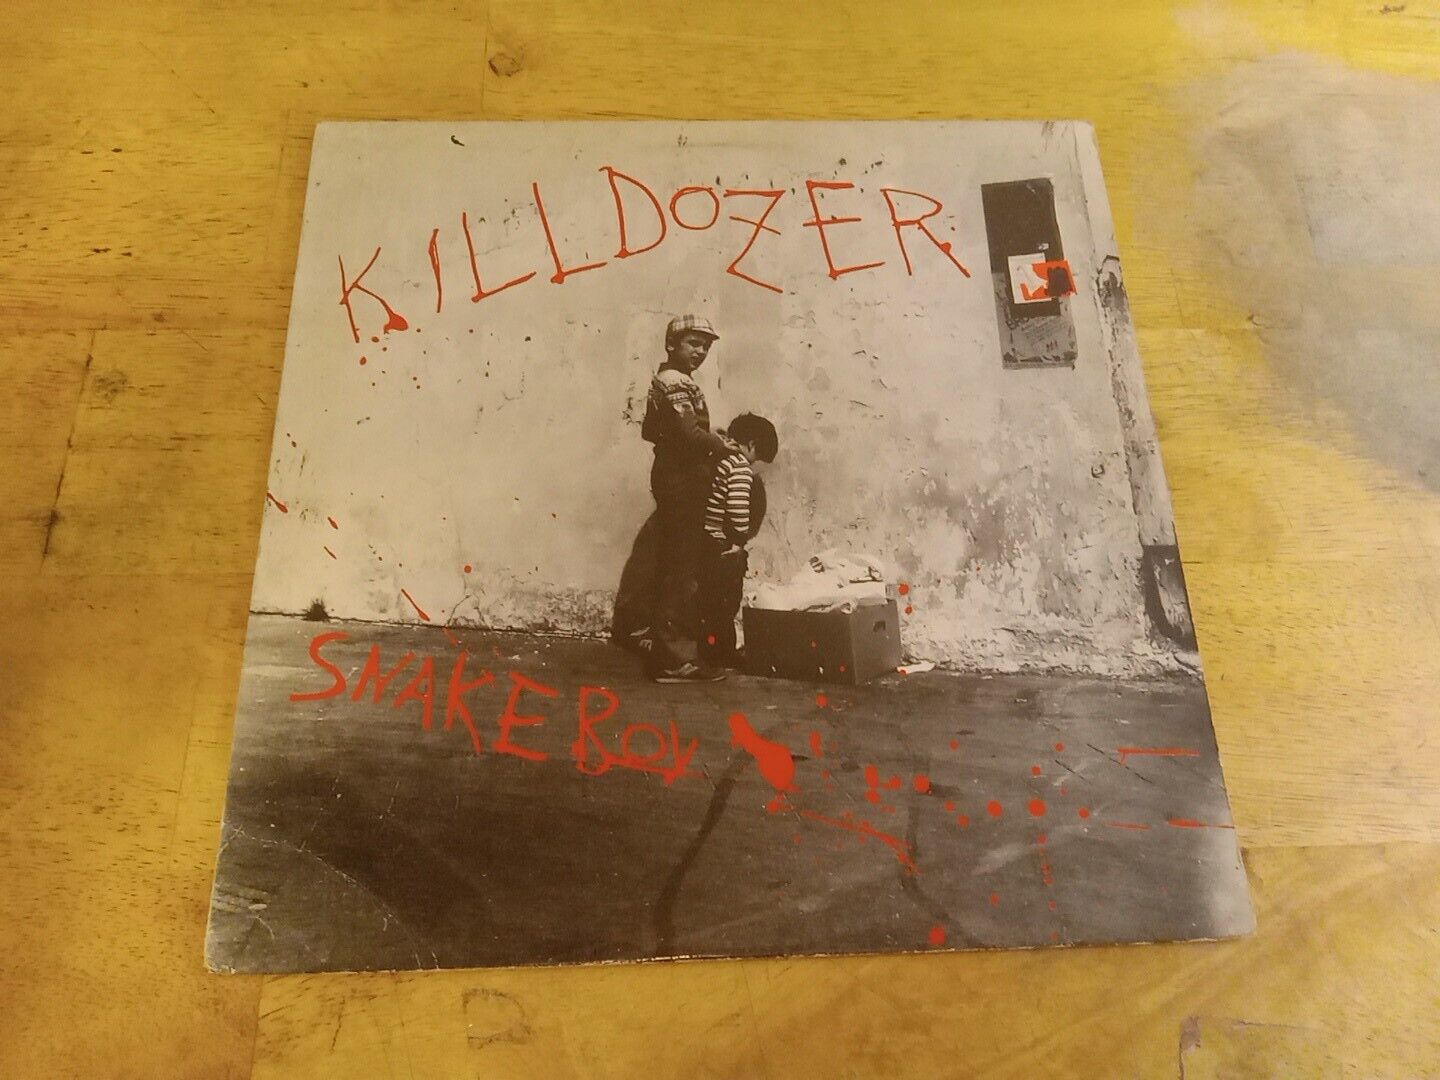 KILLDOZER Snakeboy ** orig. US issue 1985  Vg+